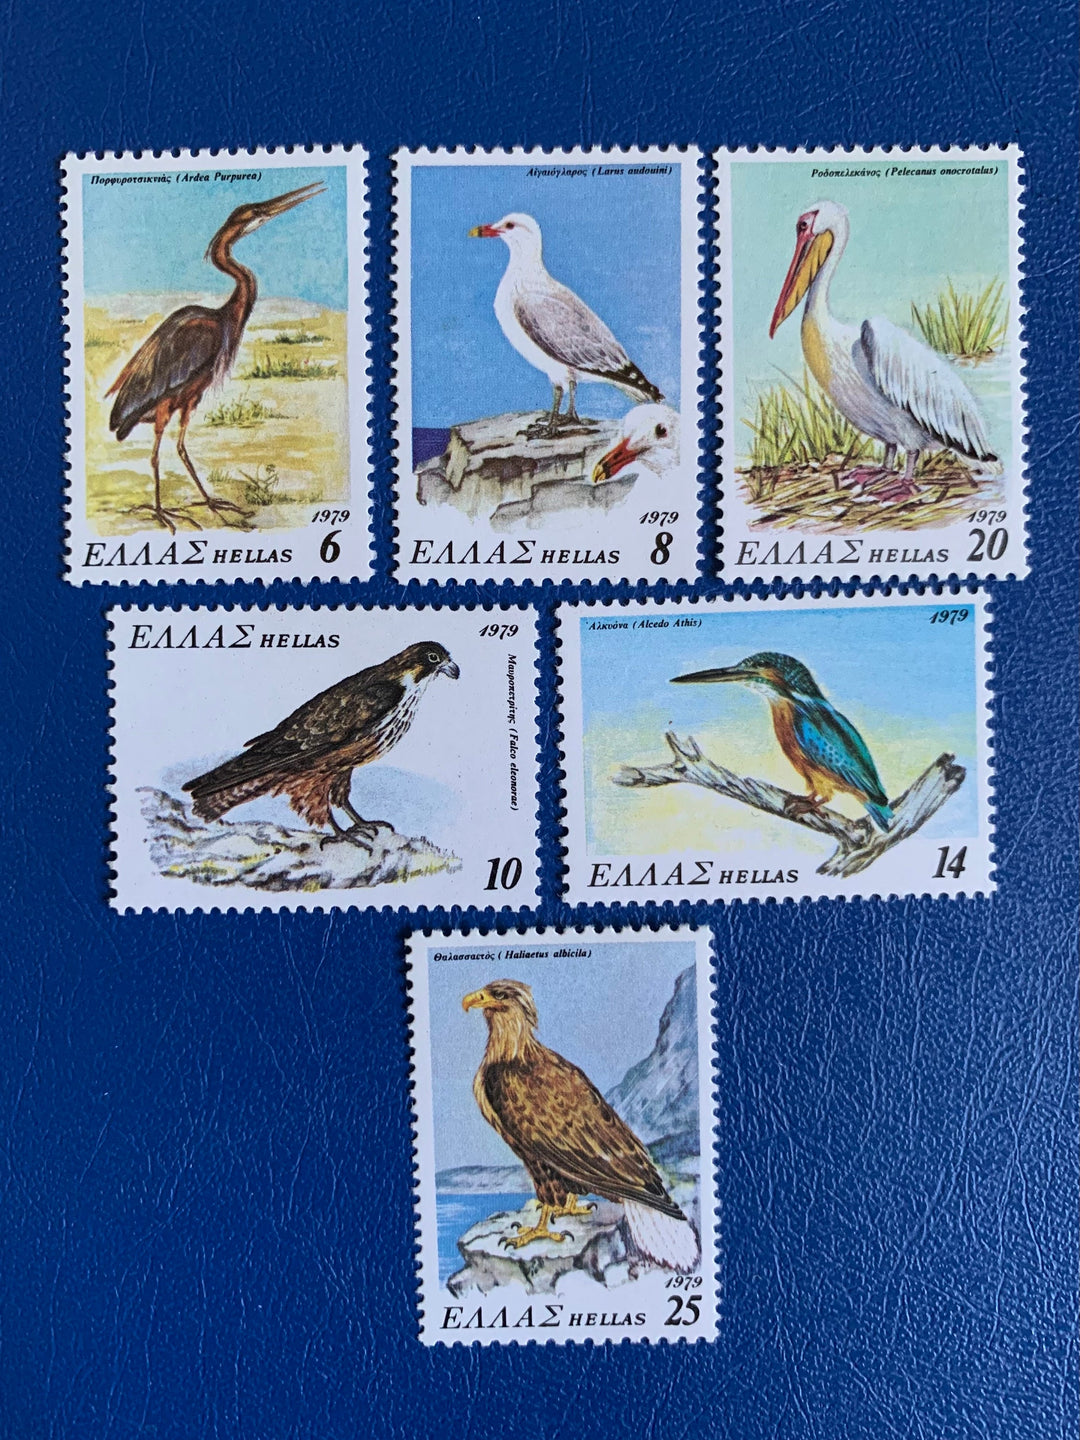 Greece - Original Vintage Postage Stamps- 1979 - Endangered Birds- for the collector, artist or collector